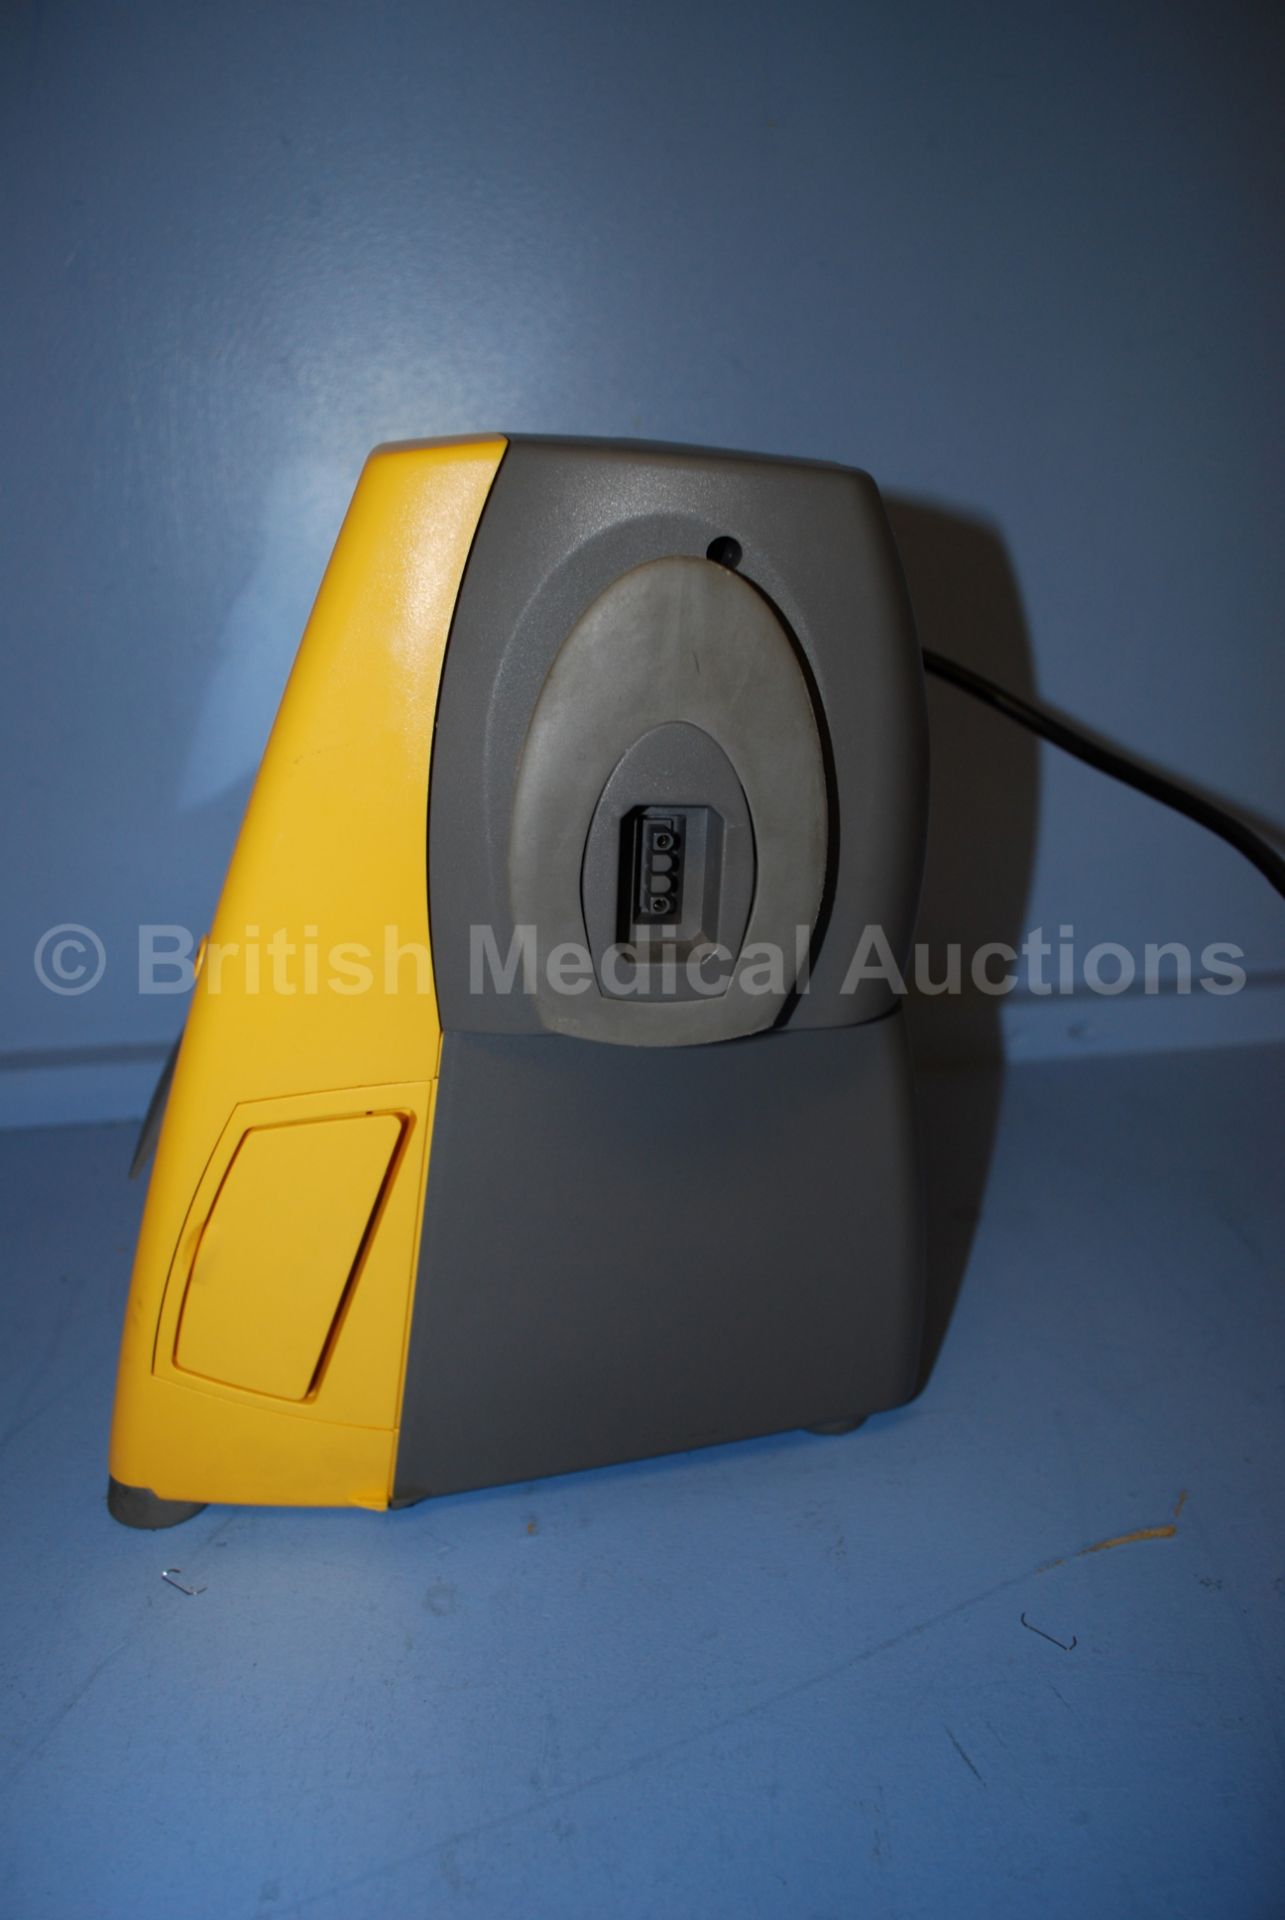 Artema Cardio Aid 200 Defibrillator with ECG Lead - Image 3 of 4